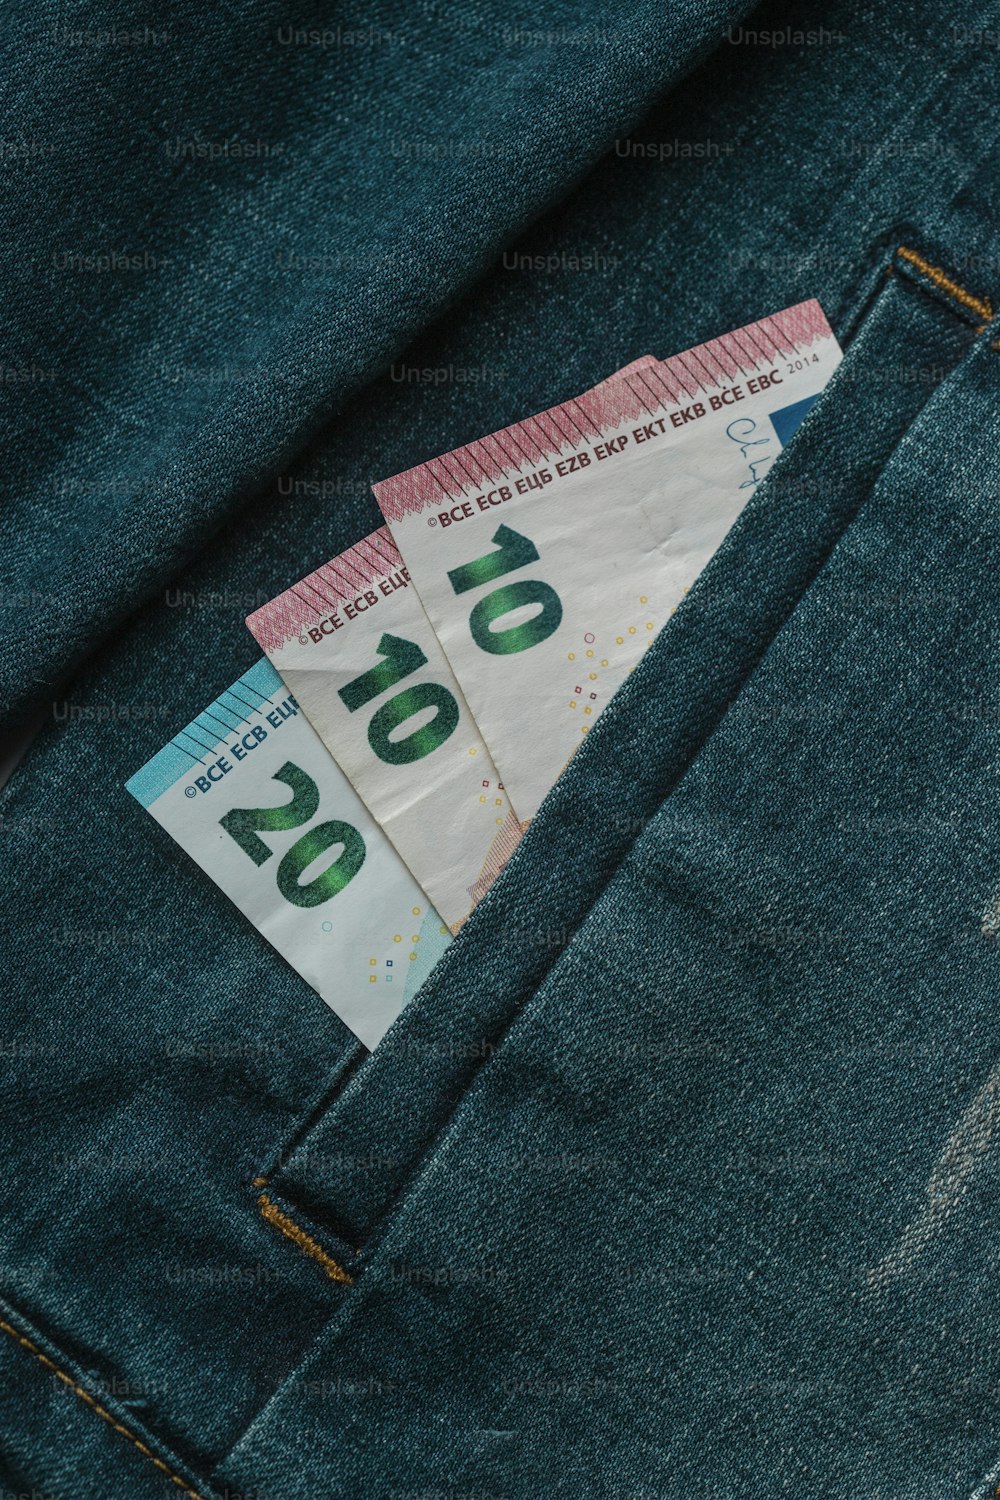 Un par de dinero que sobresale del bolsillo trasero de un par de jeans